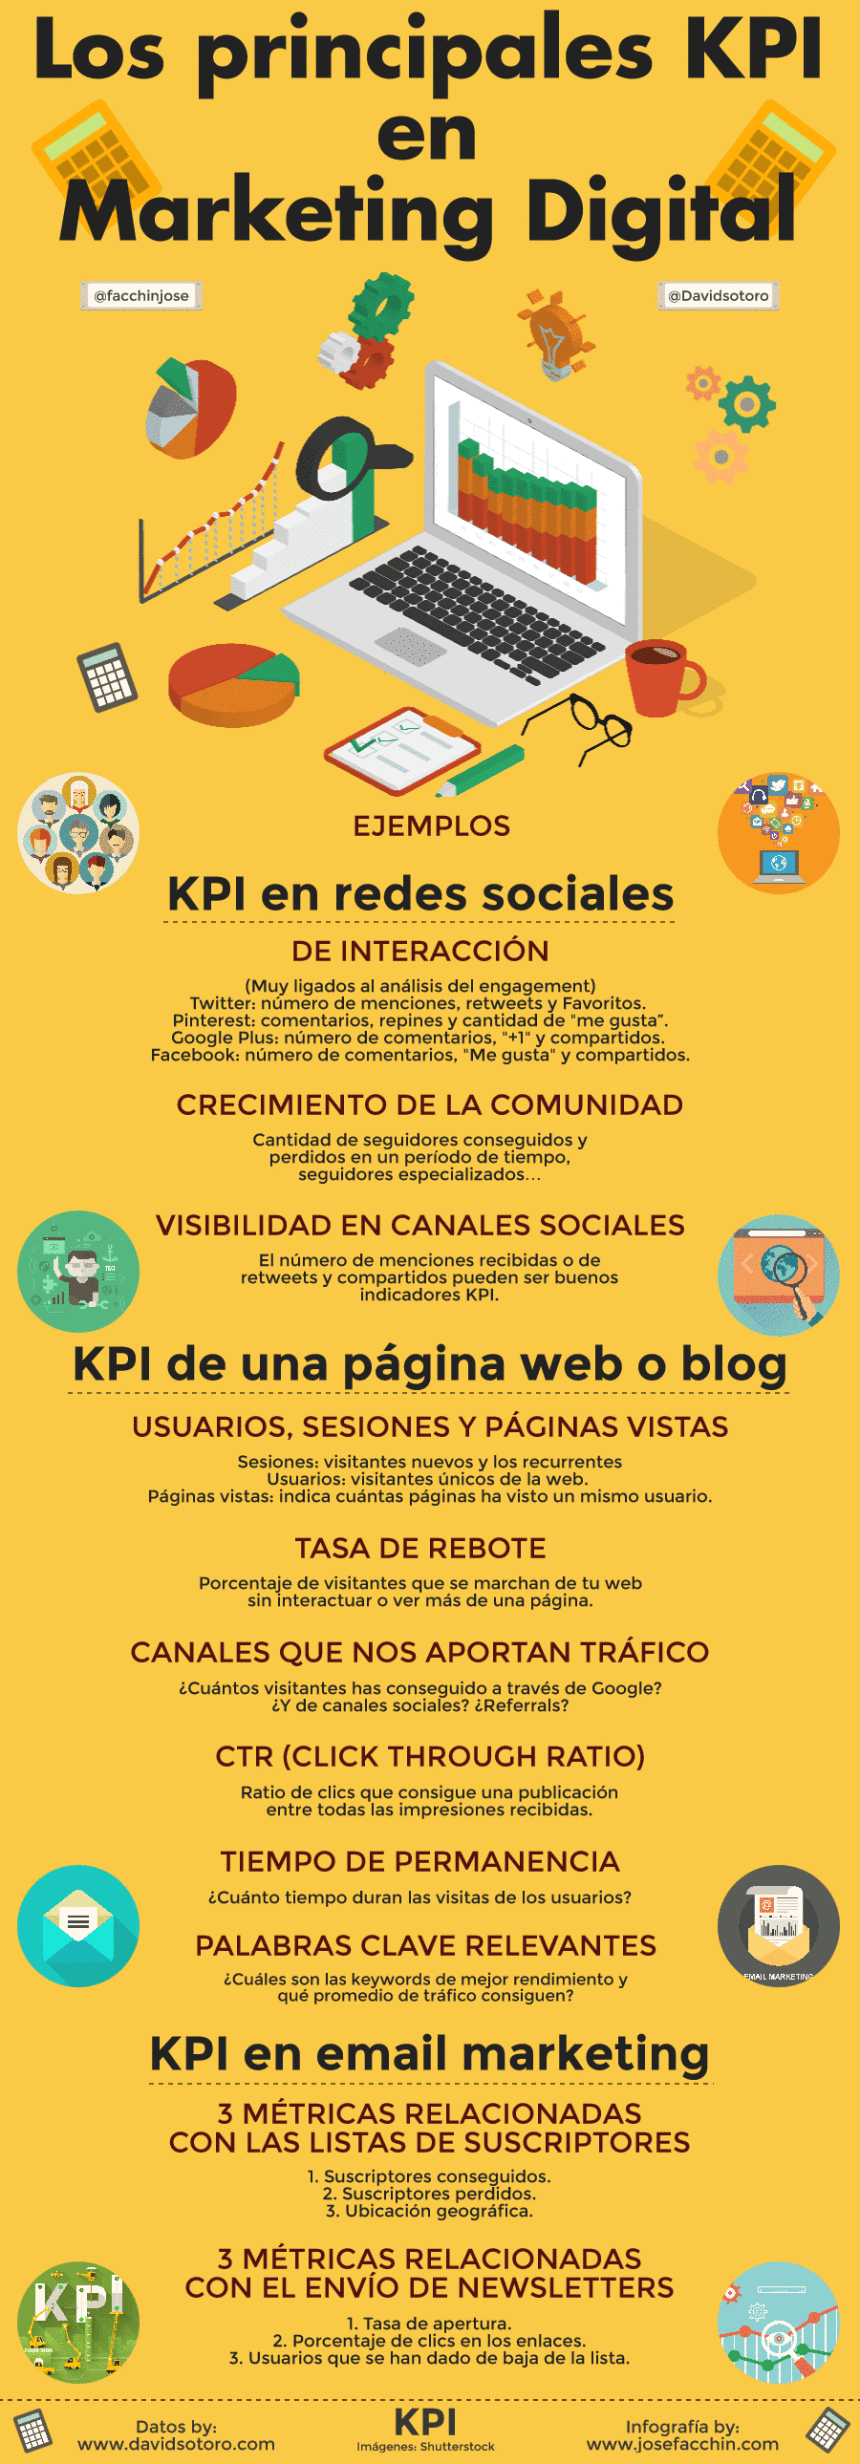 kpi-marketing-digital-infografia